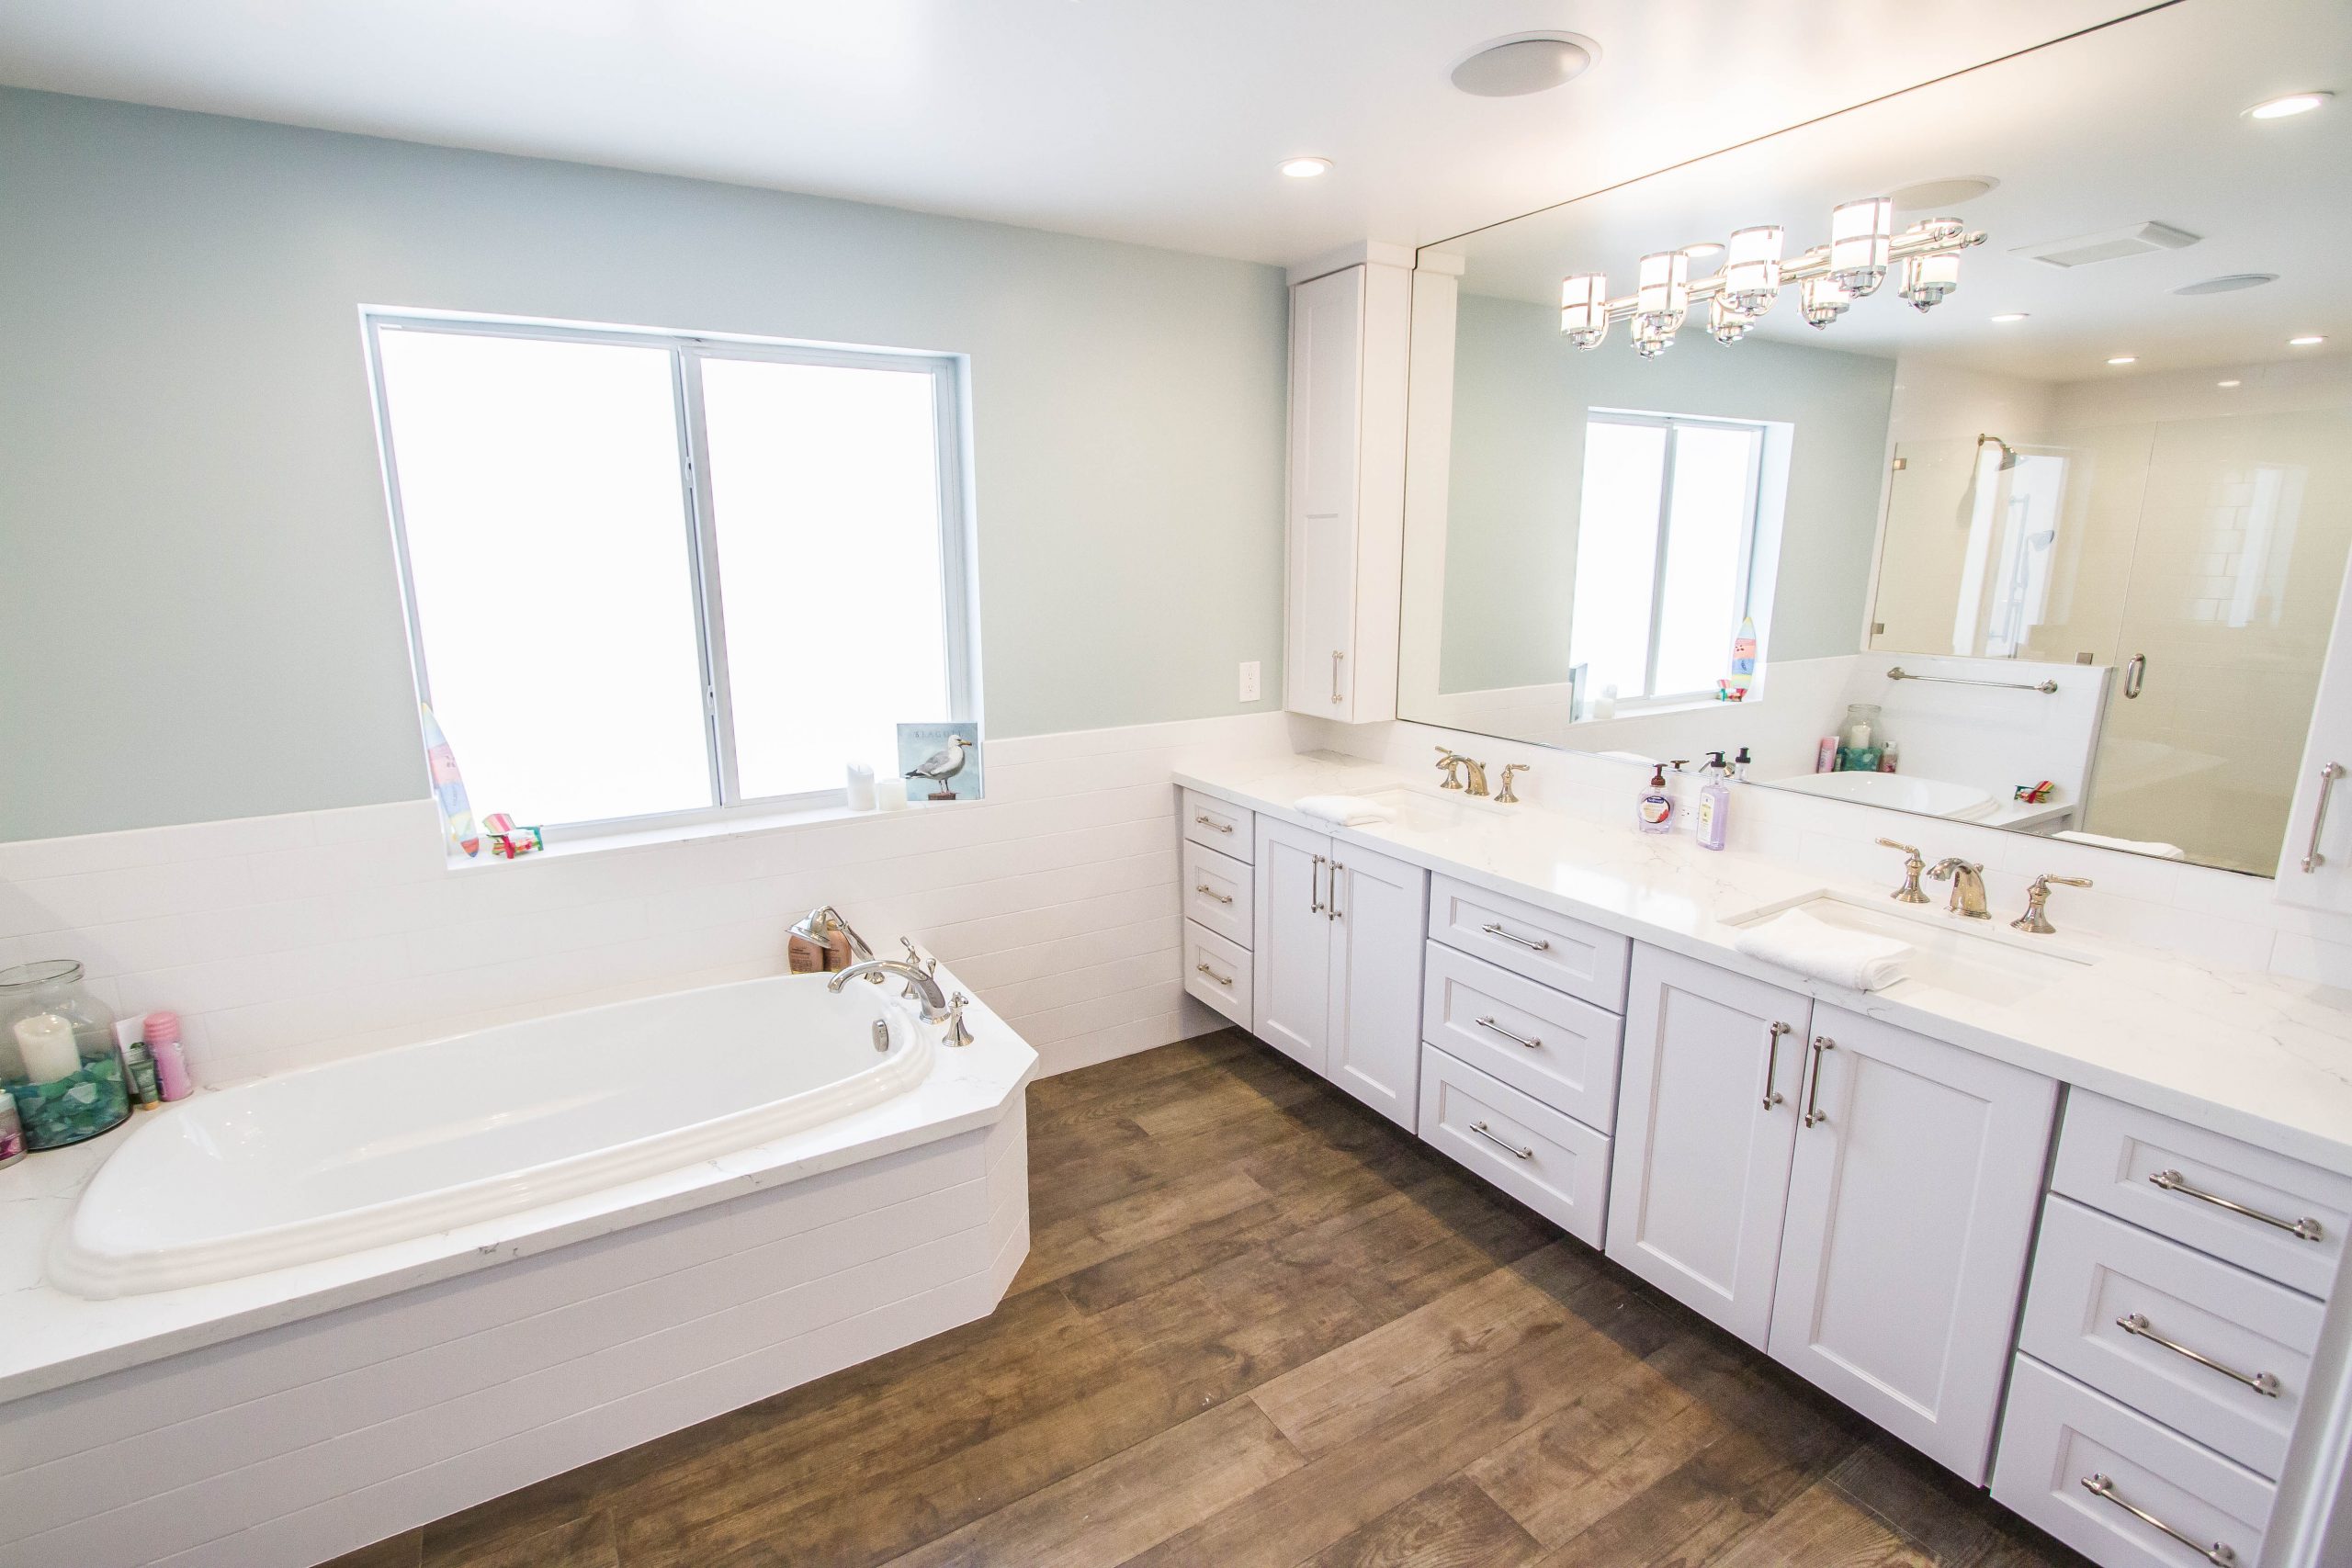 Double bathroom vanity with white marble countertops